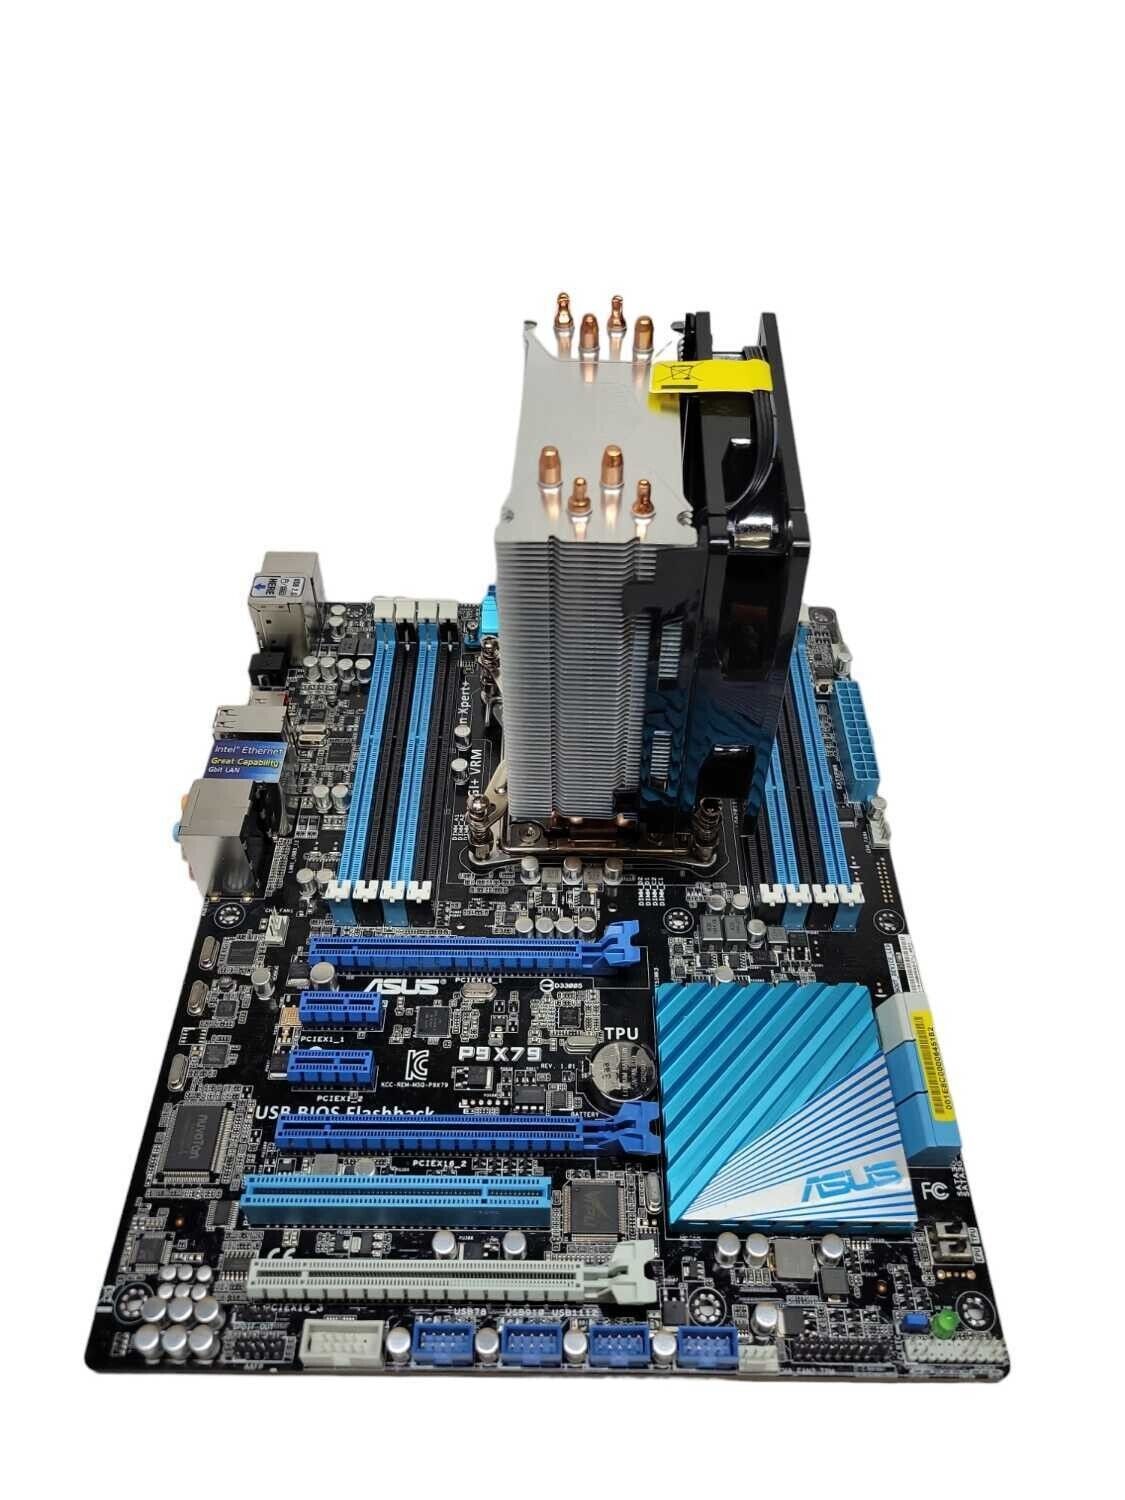 Asus P9X79 WS Motherboard w/ i7-4820K 3.7GHz 4 core LGA 2011 CPU I/O Shield